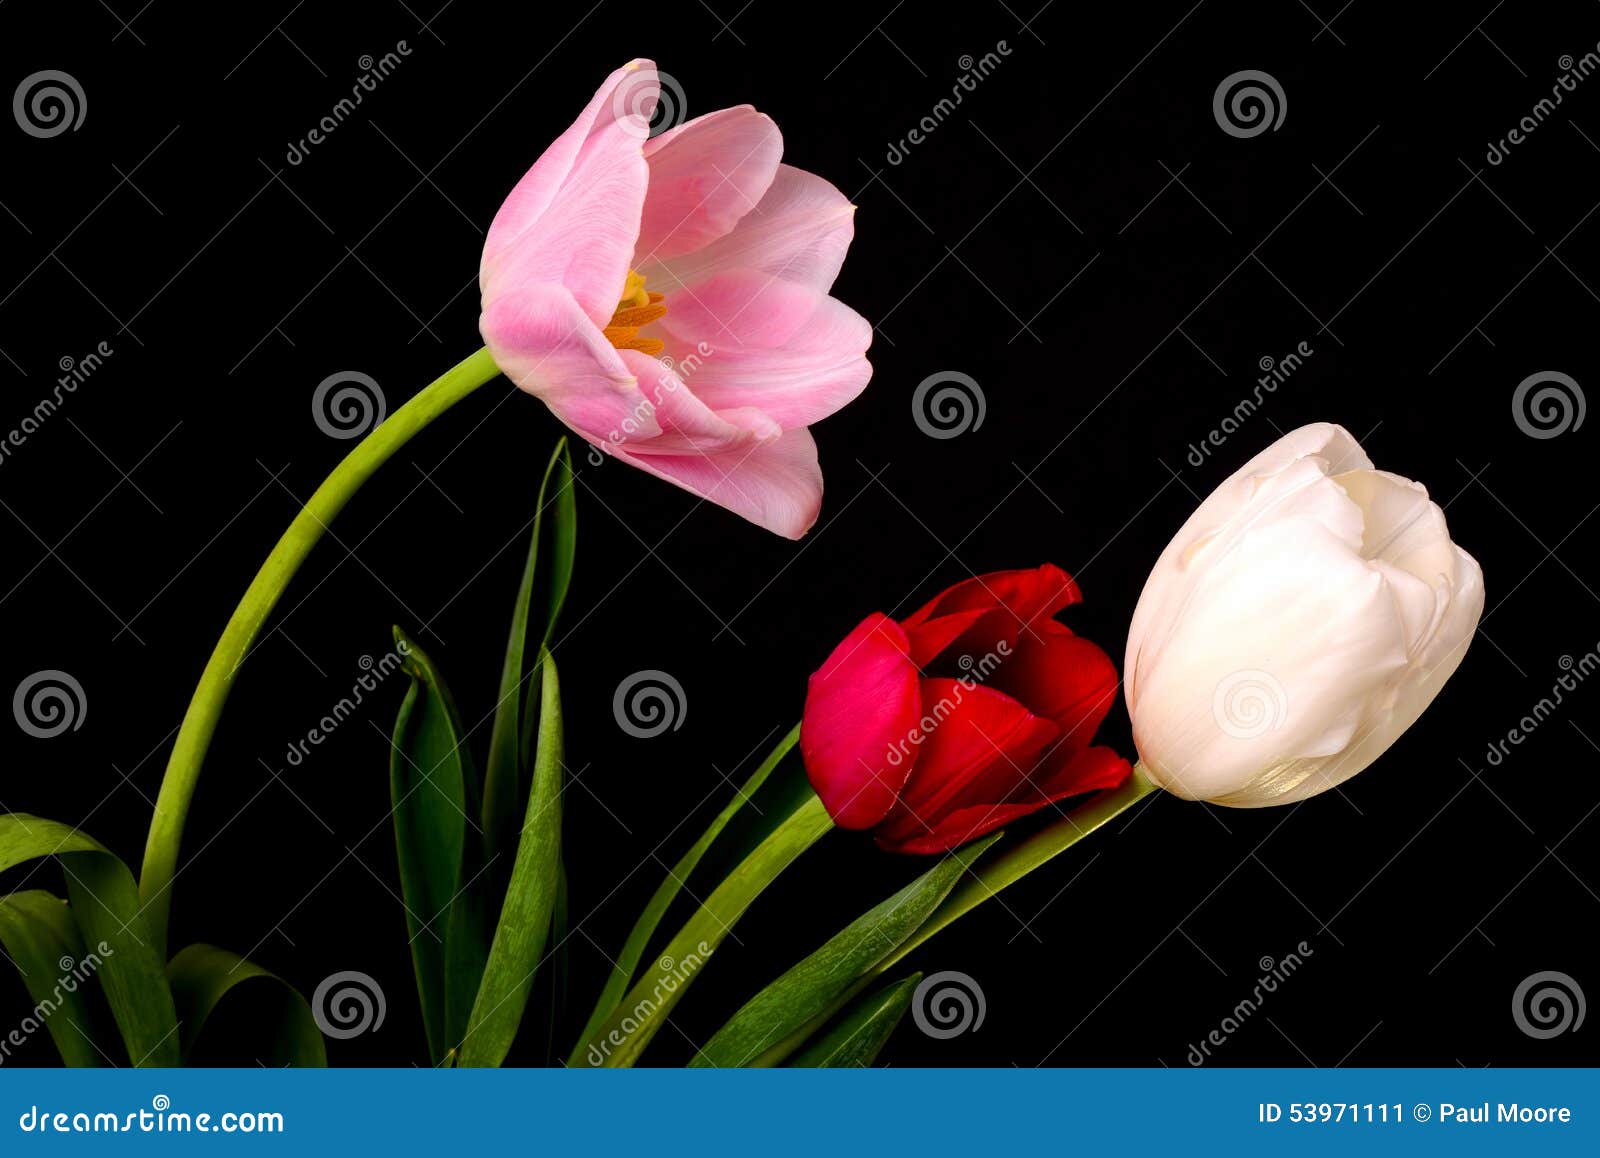 tulip floral arrangement